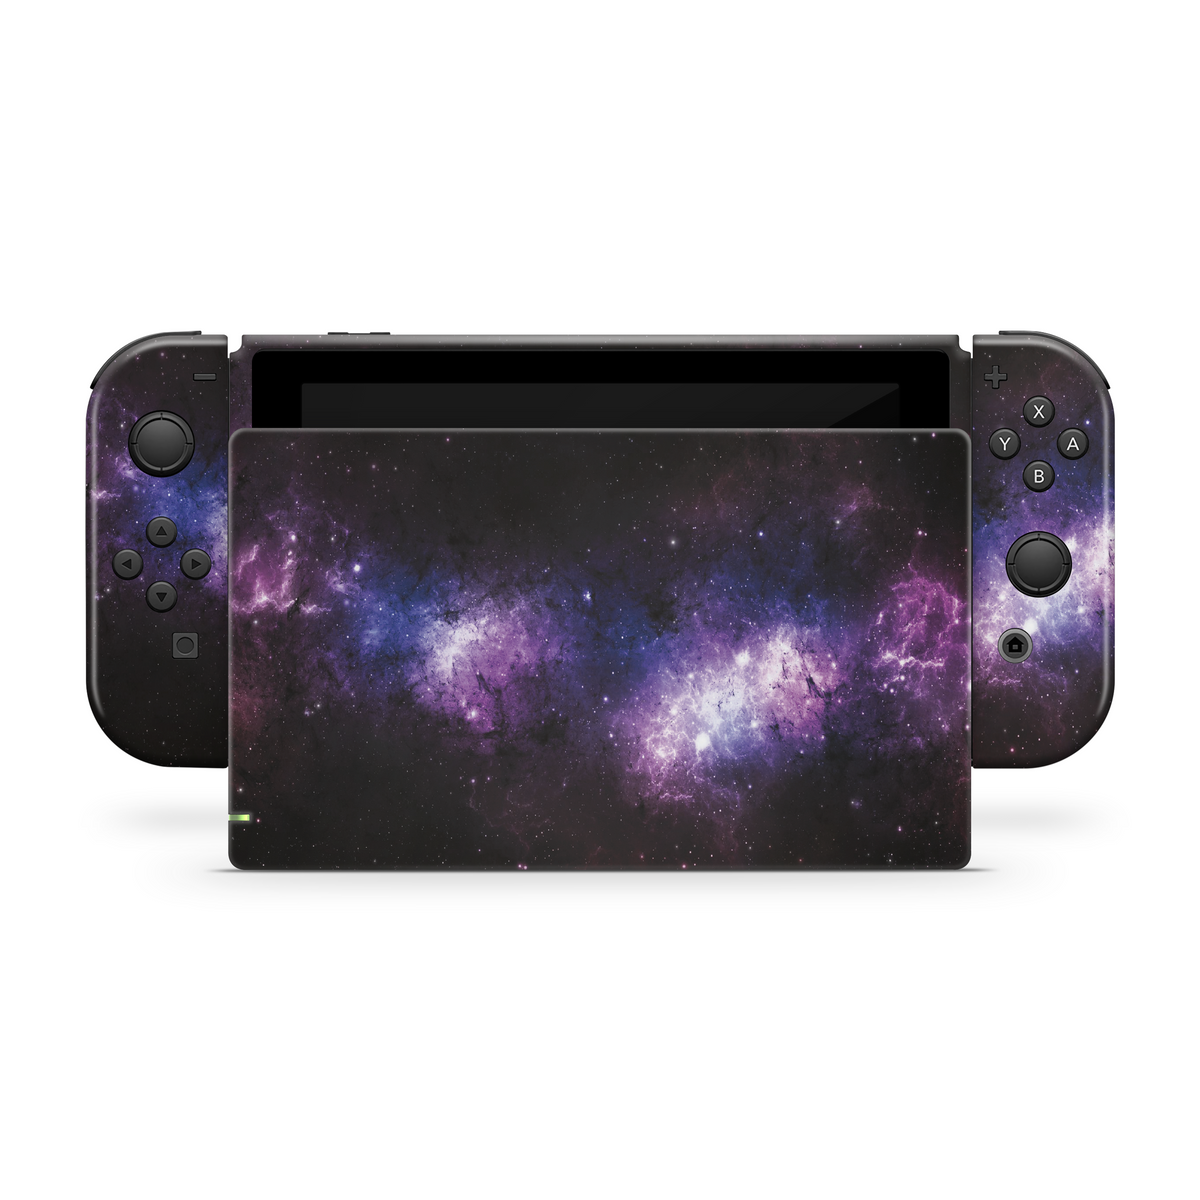 Galaxy (Nintendo Switch Skin)